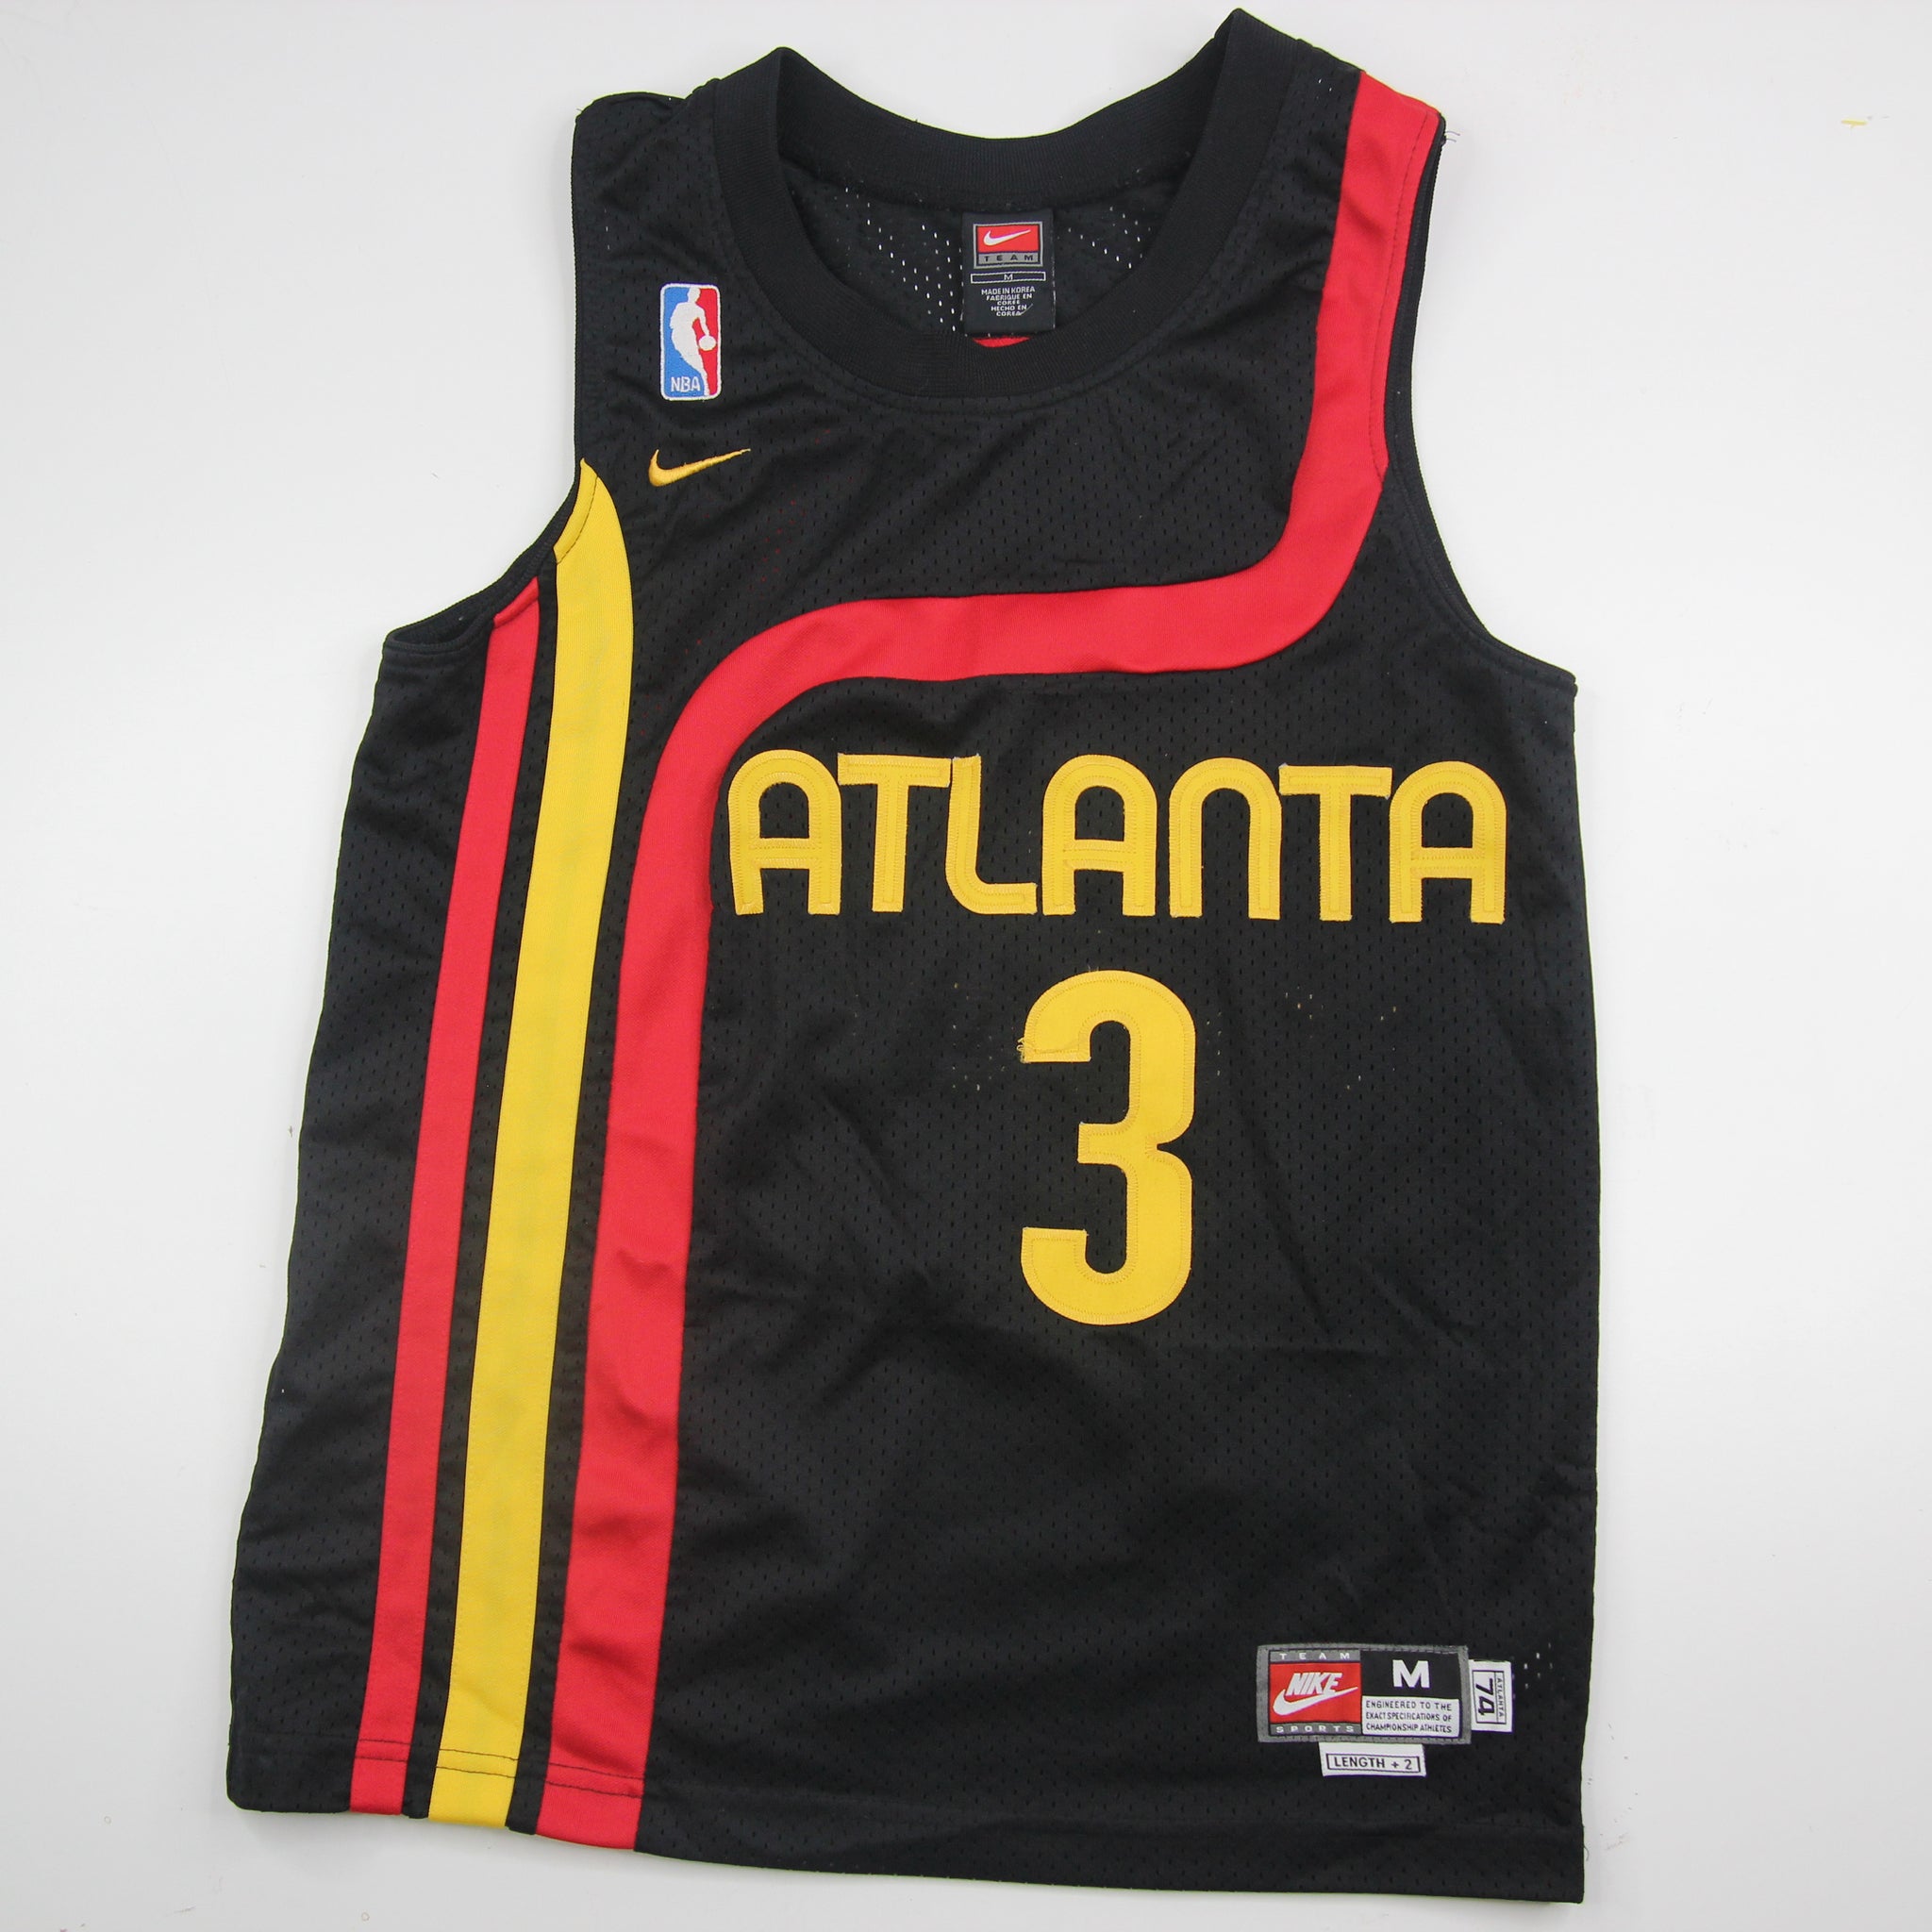 Atlanta Hawks Throwback Jerseys, Hawks Retro Uniforms